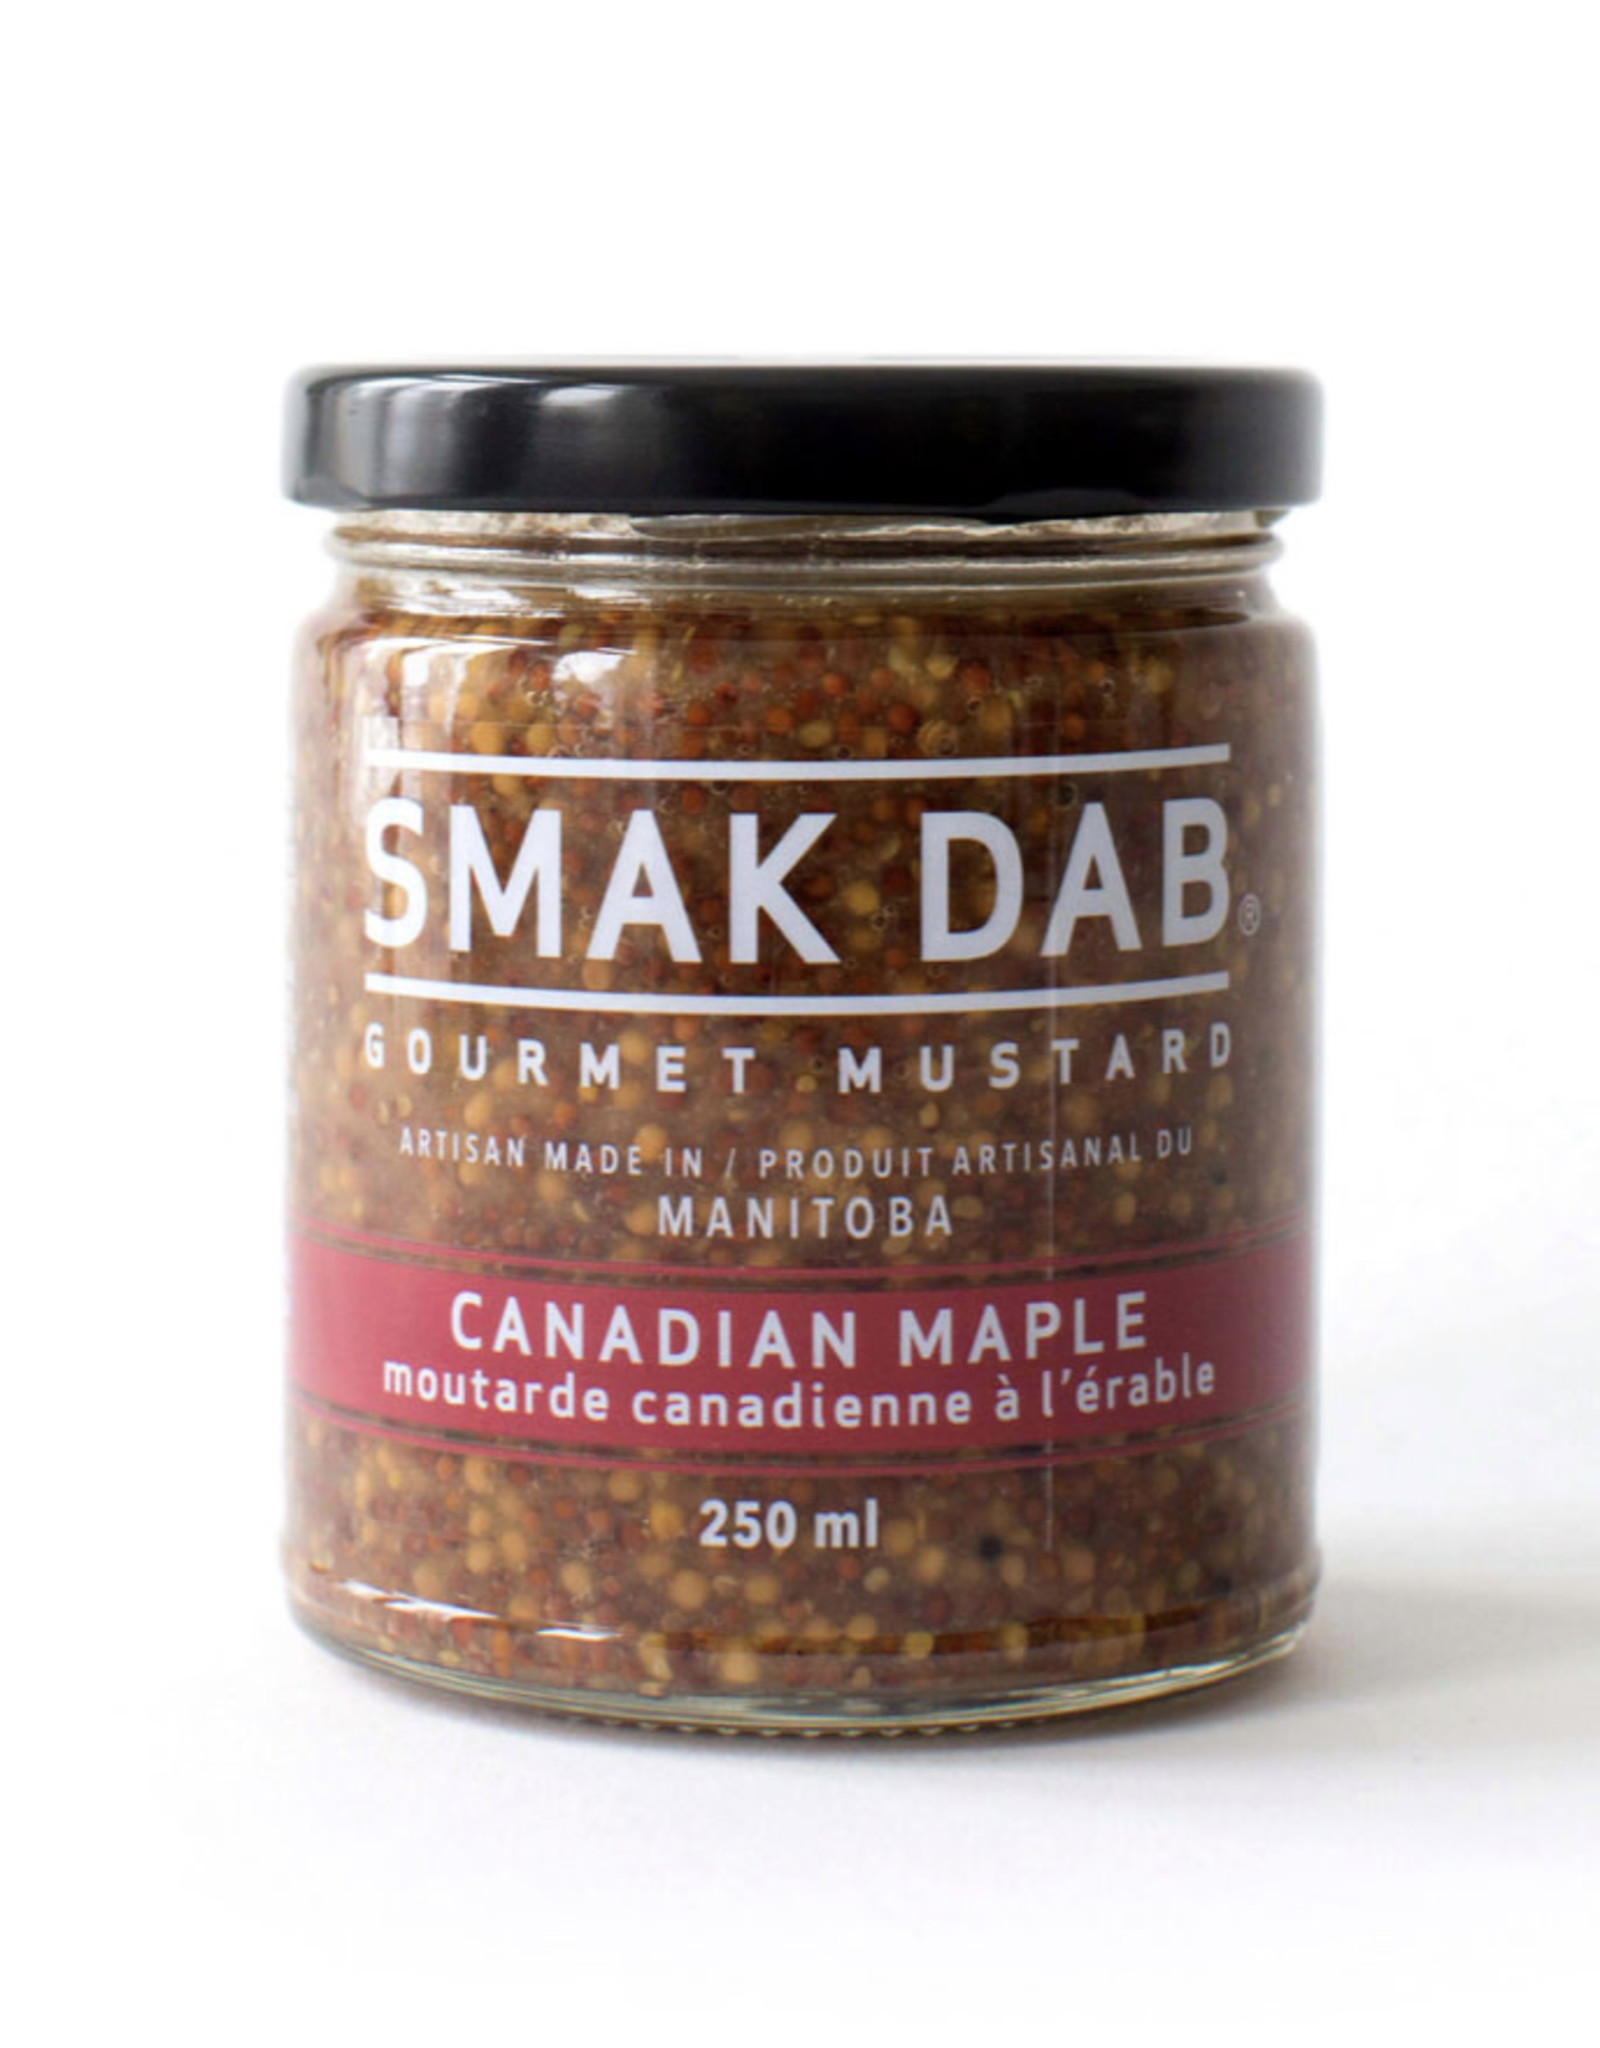 SmakDab Gourmet Mustard Canadian Maple